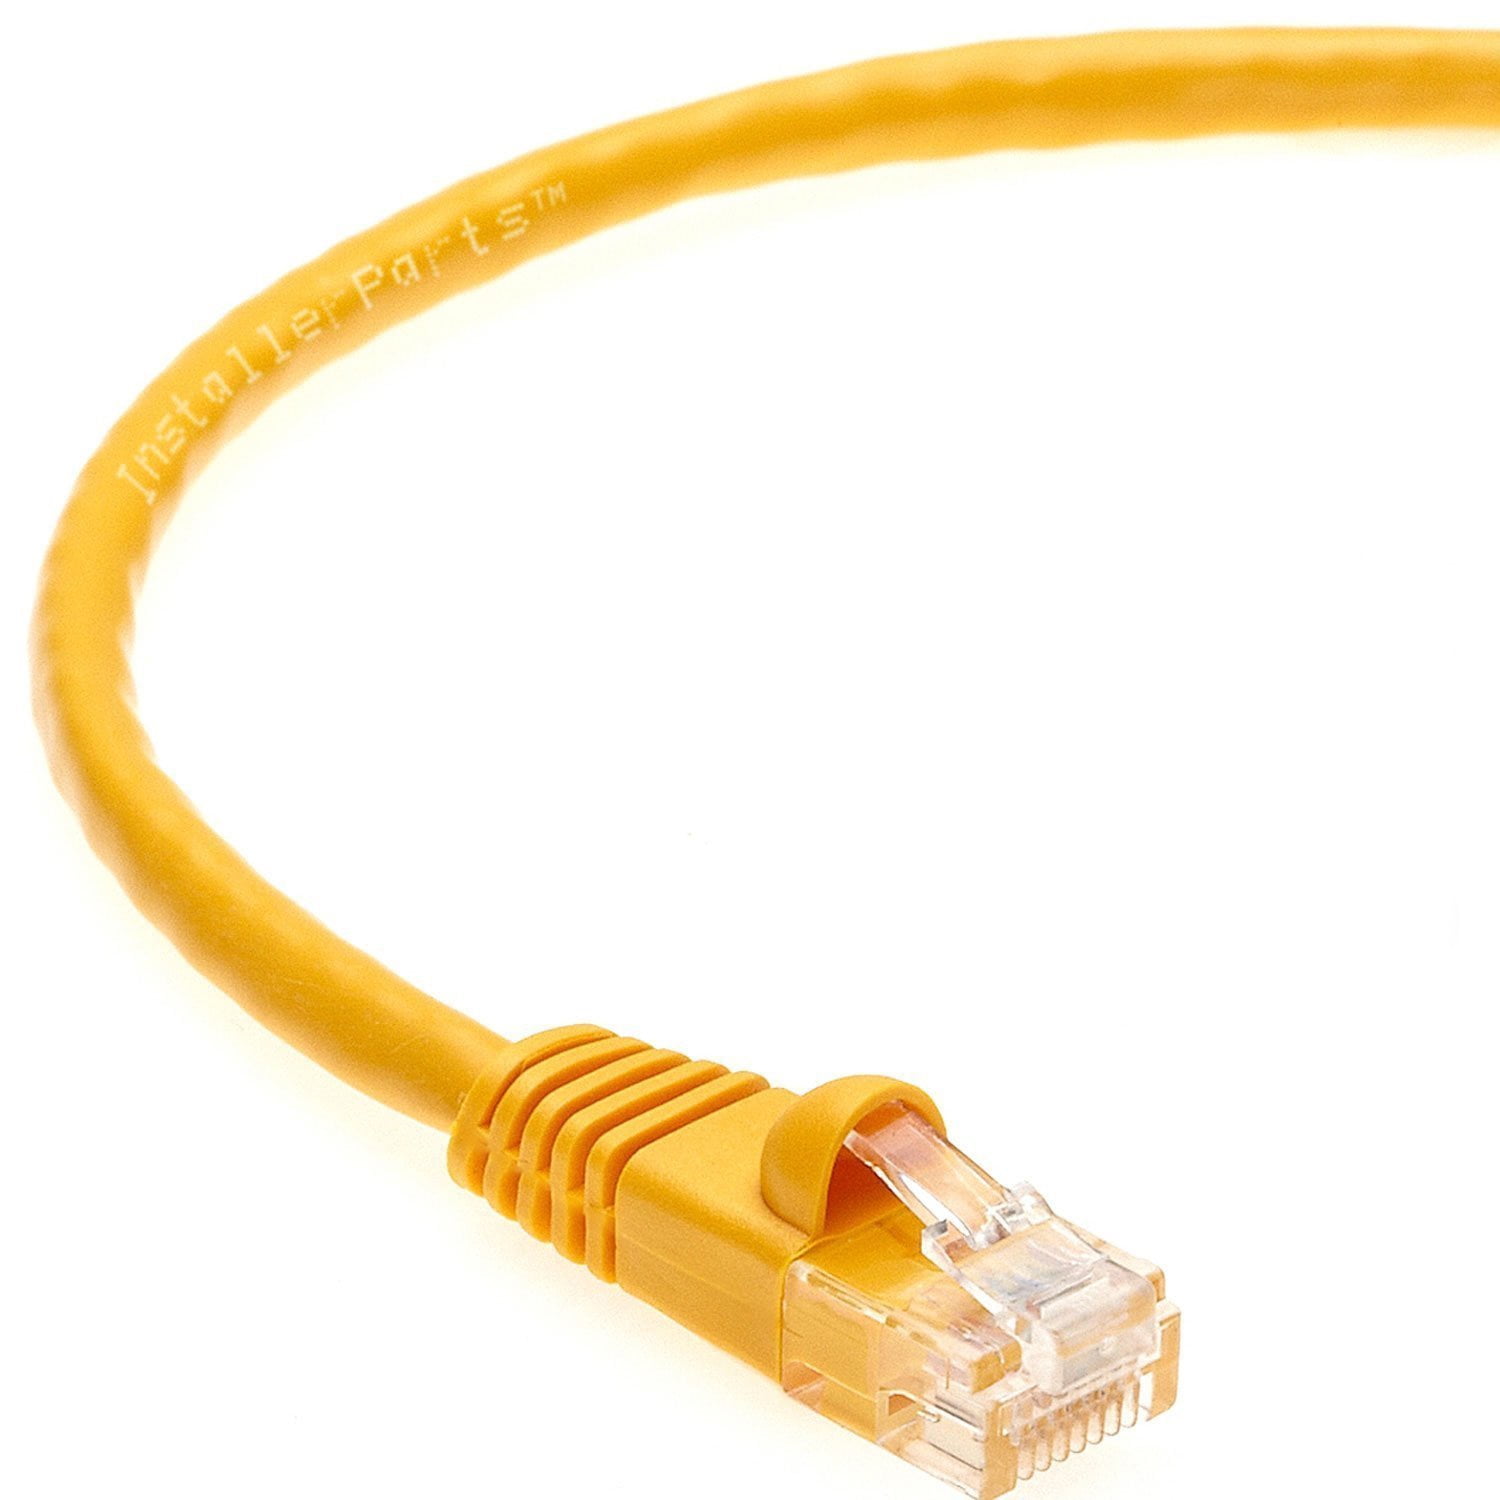 Интернет кабель. Оптоволокно интернет 10gigabit. Желтый кабель для интернета. Желтый шнур для интернета. Тонкий интернет кабель.